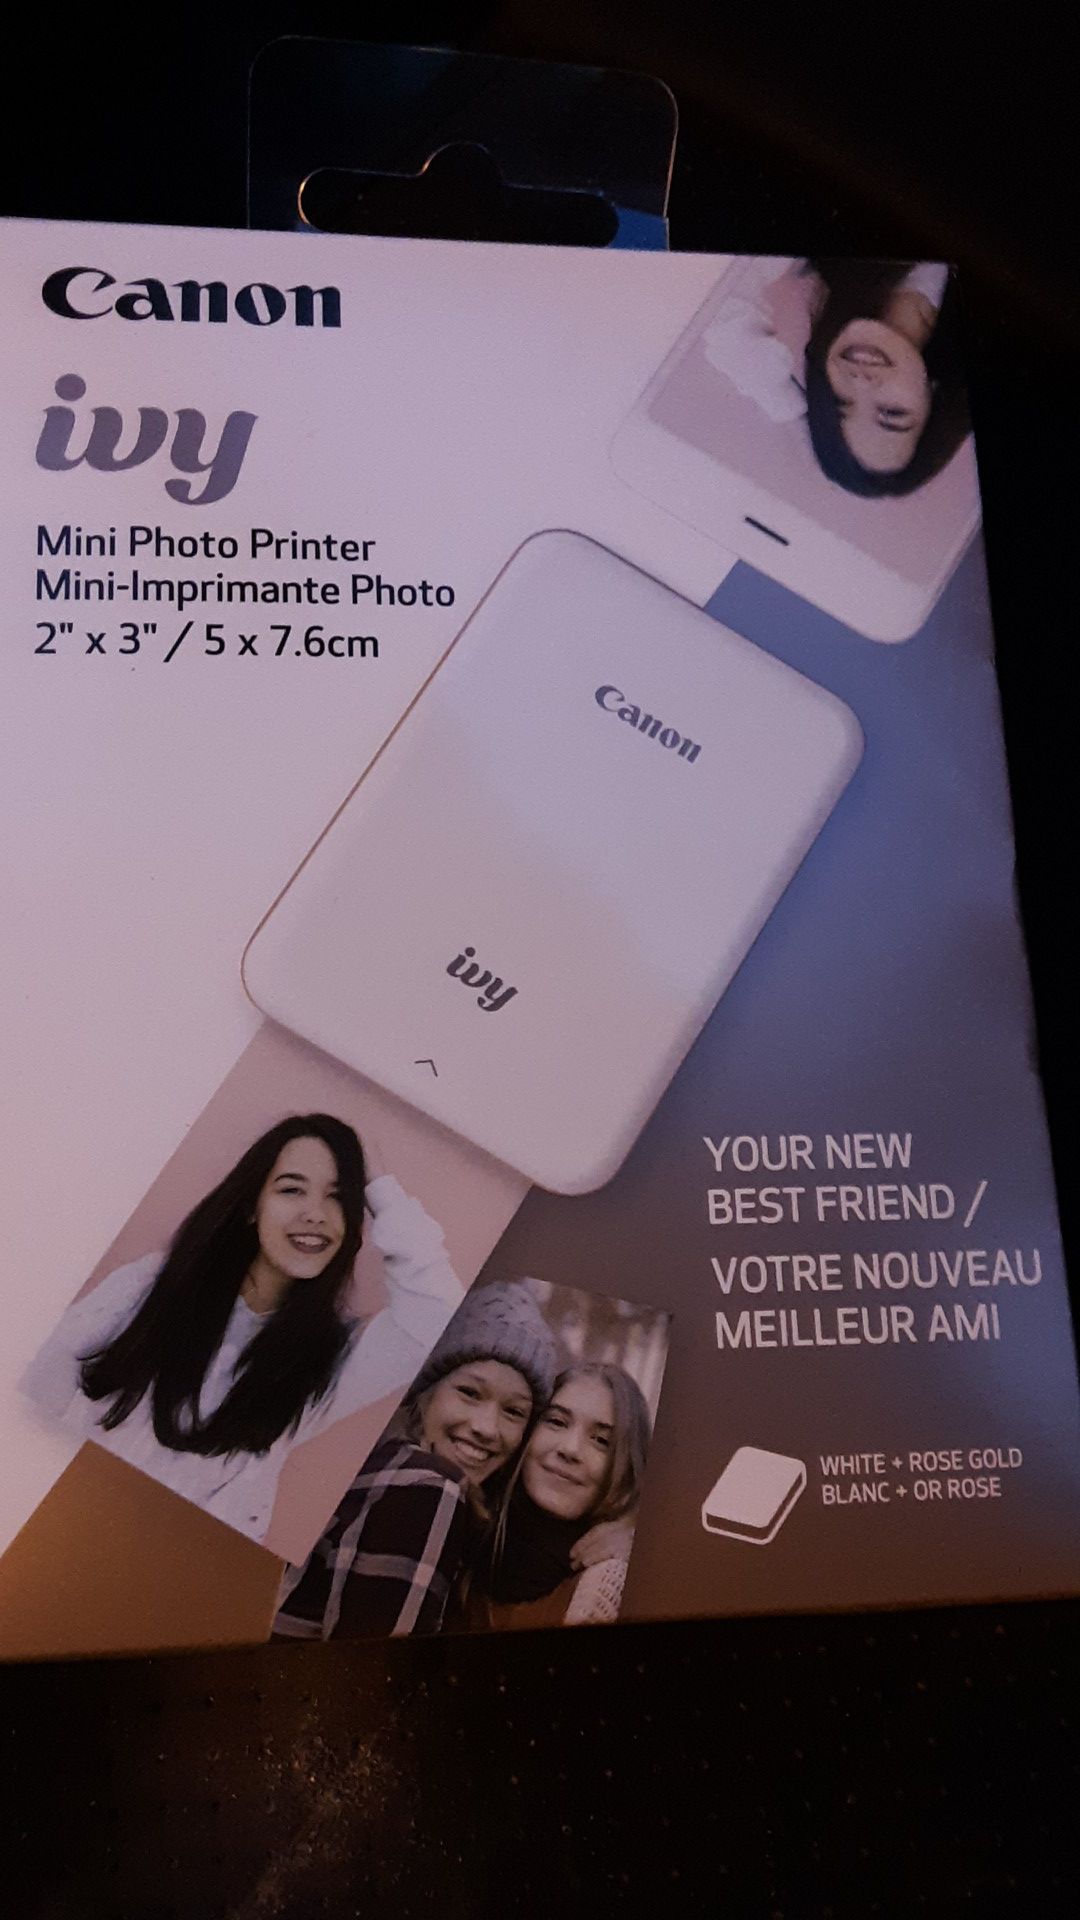 Canon ivy mini photo printer